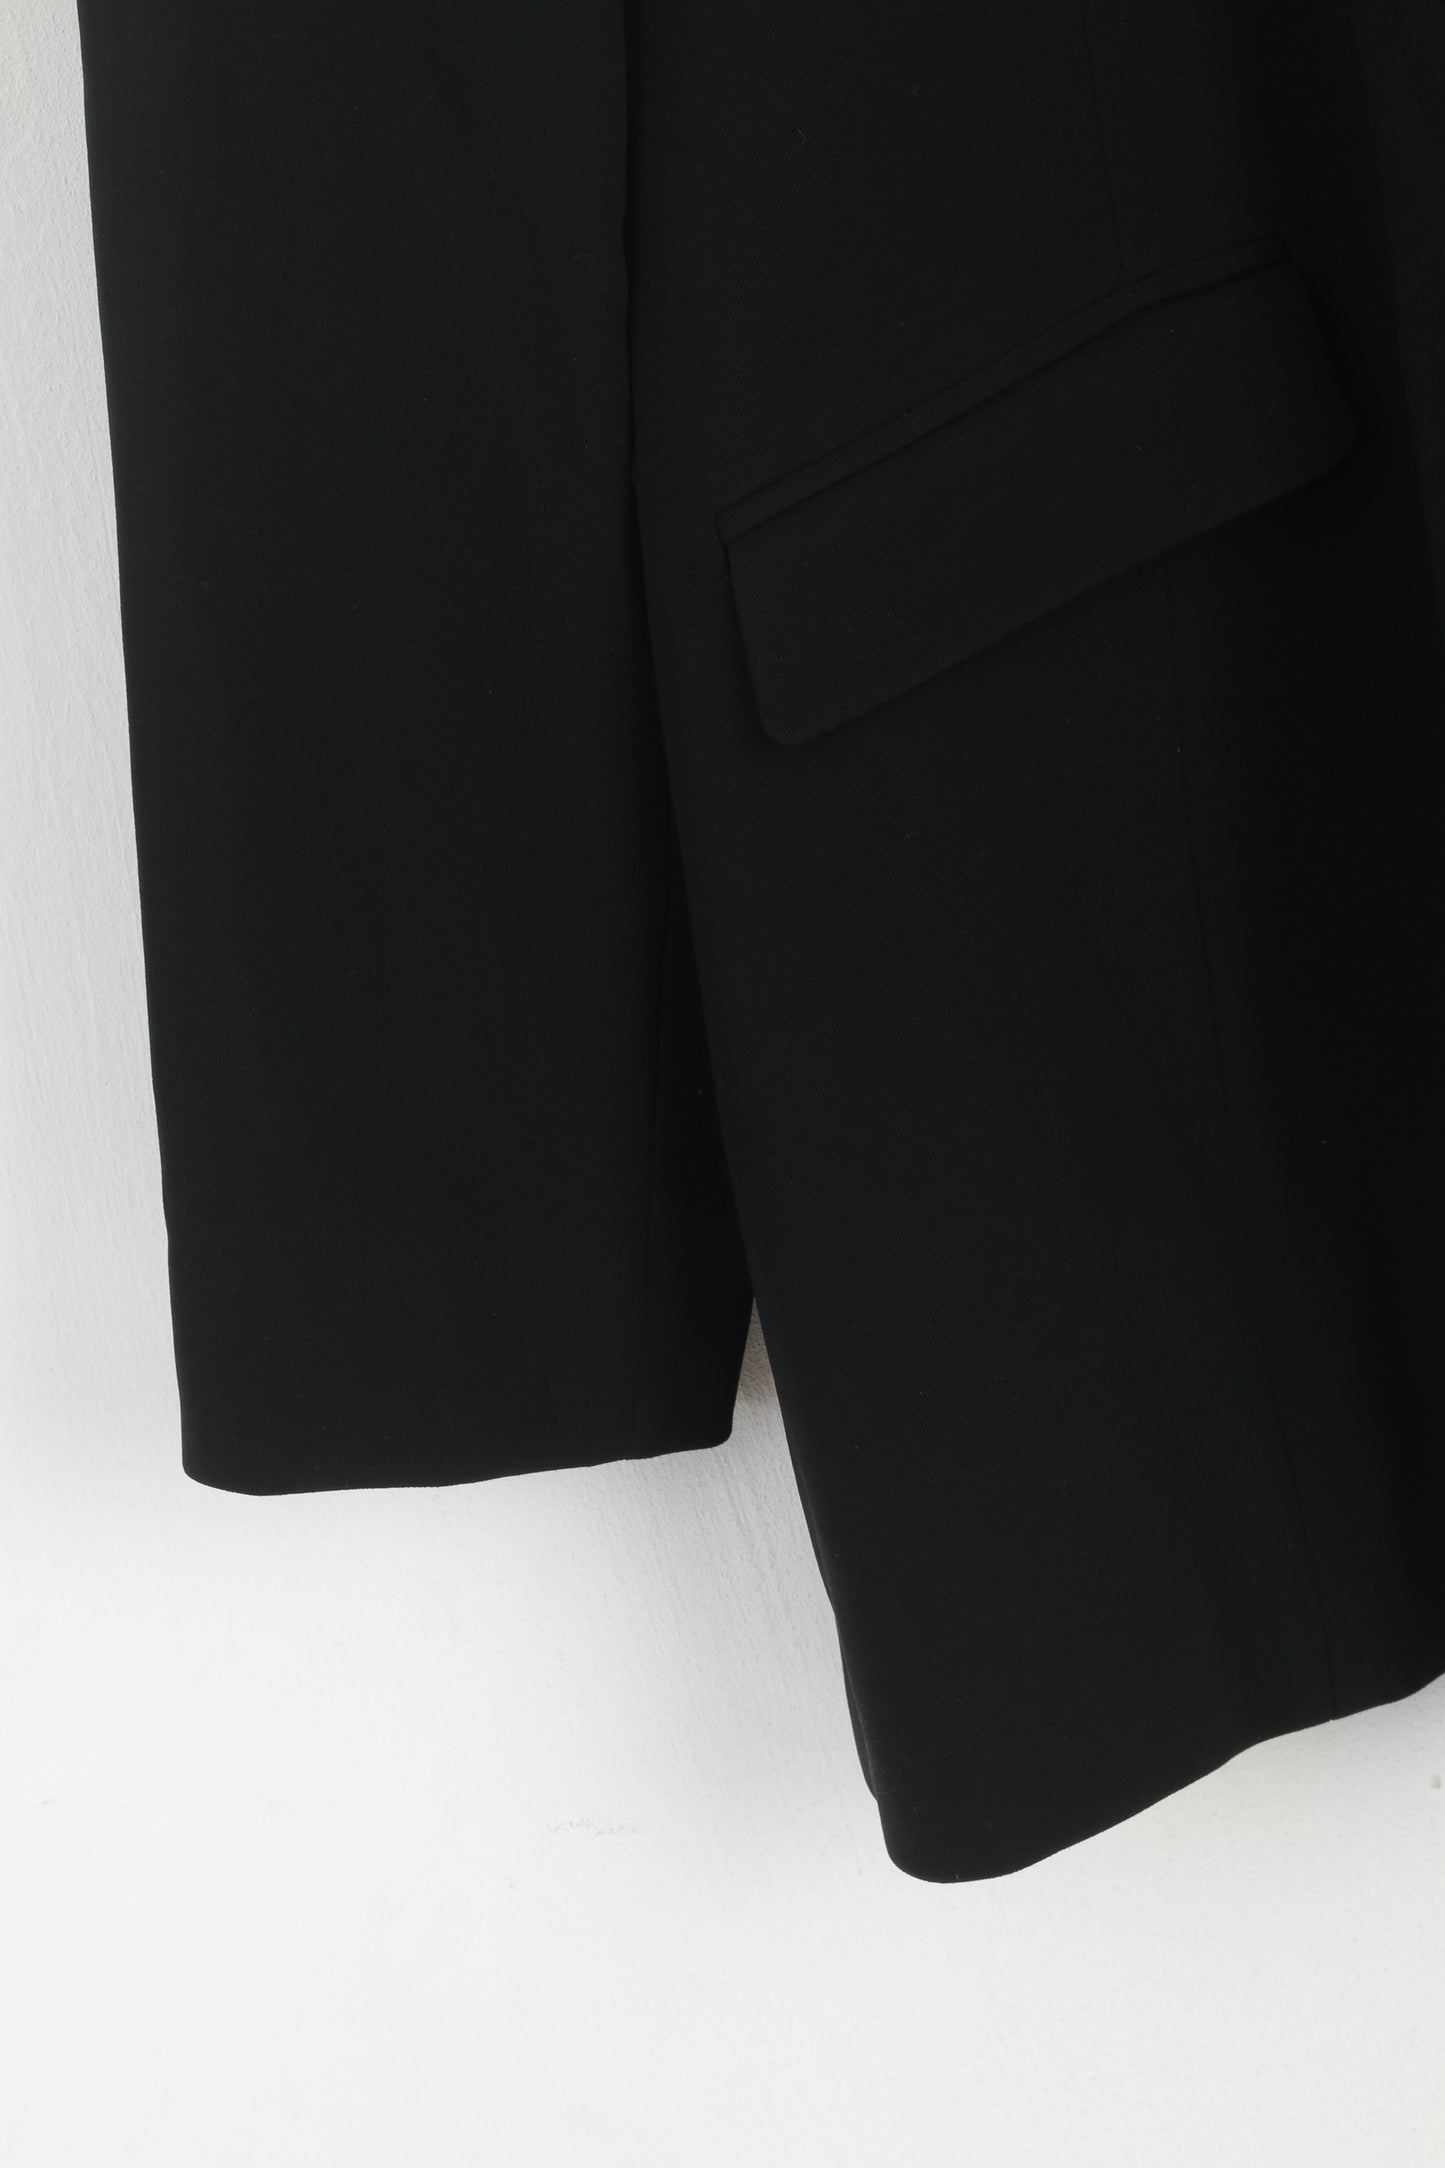 Jones New York Women 10 M Blazer Black Shiny  Triacetate Single Breasted Long Jacket